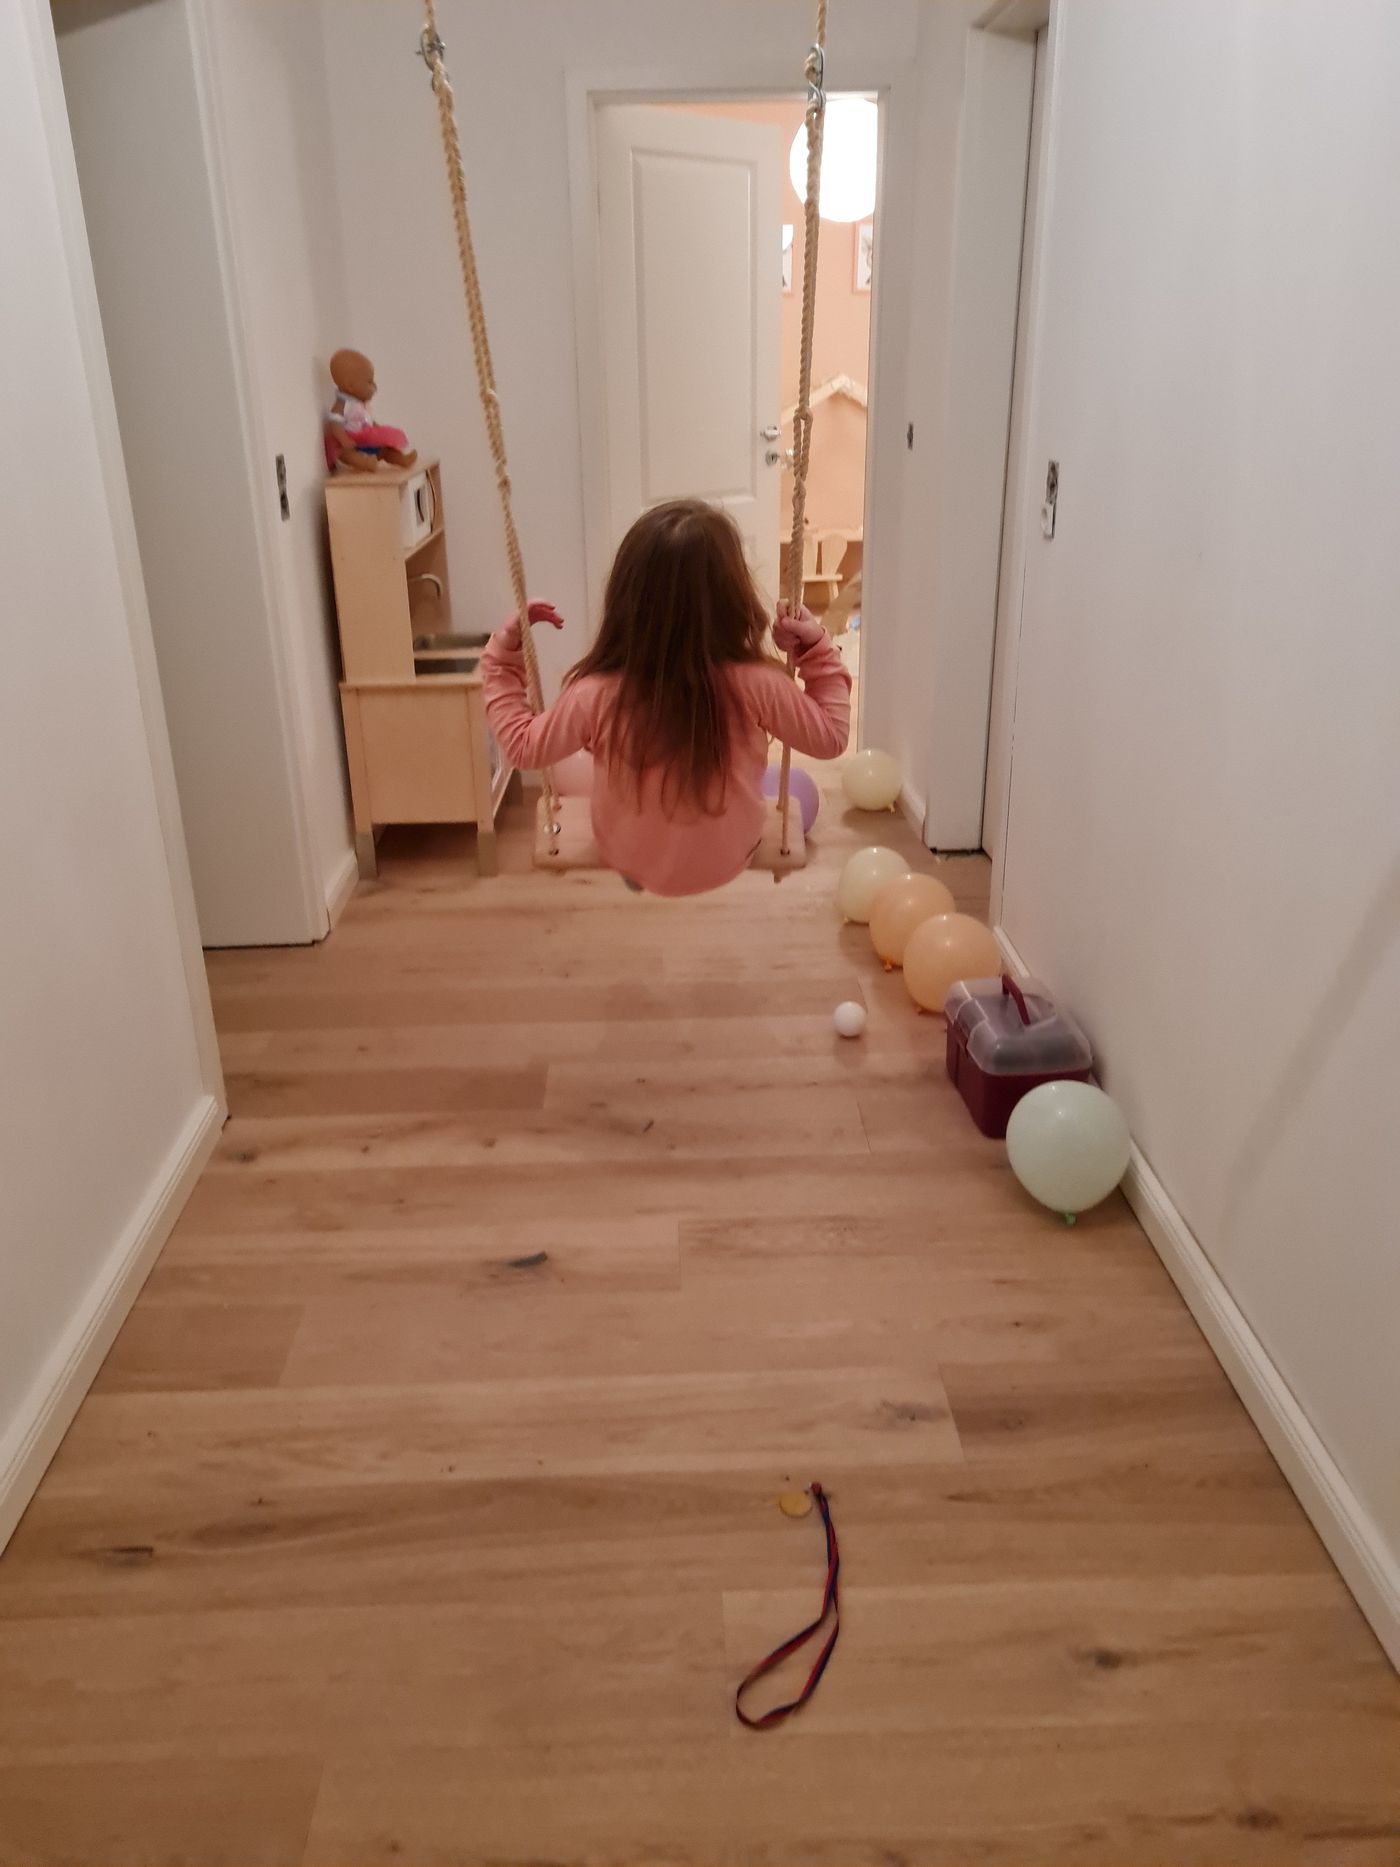 Ikea Kinderzimmer